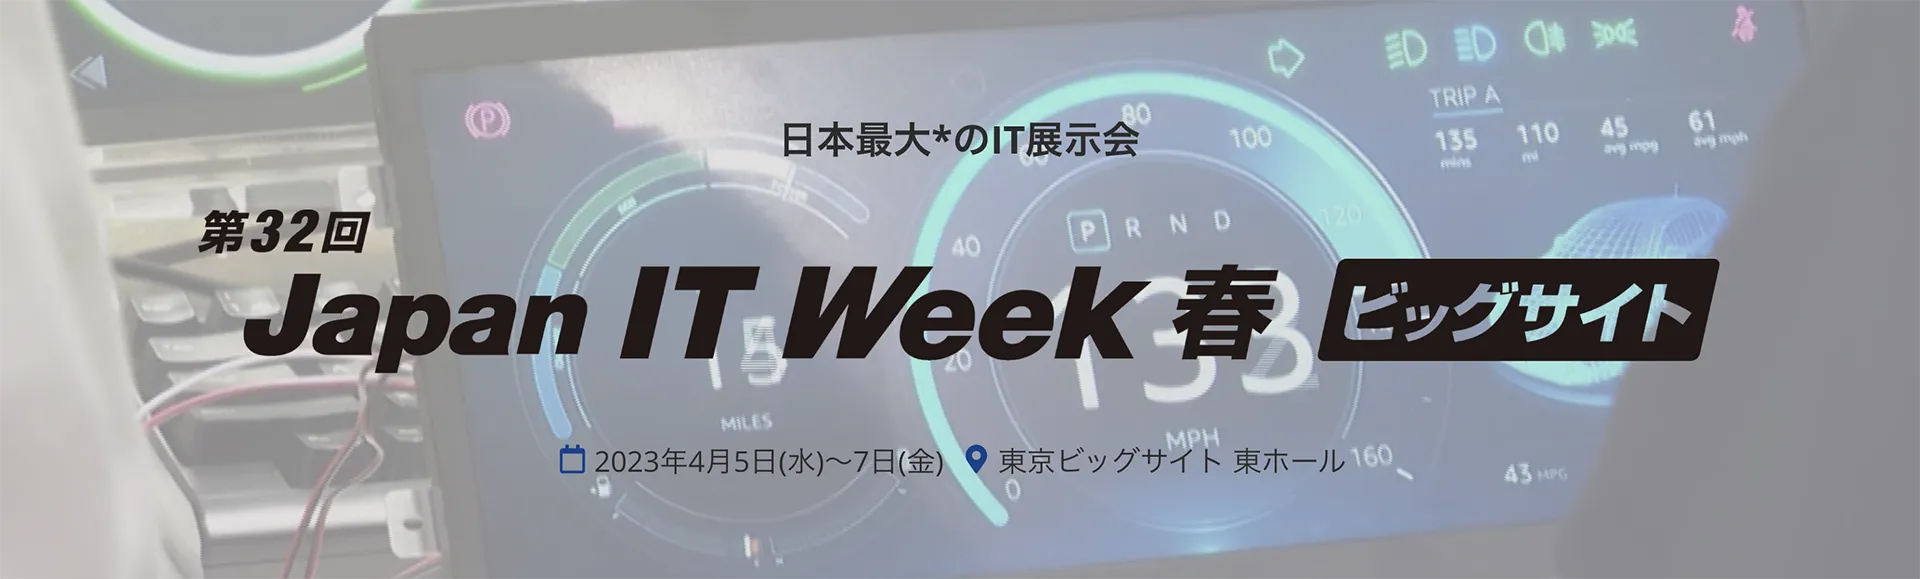 Japan IT Week【春】組込み/エッジ コンピューティング展